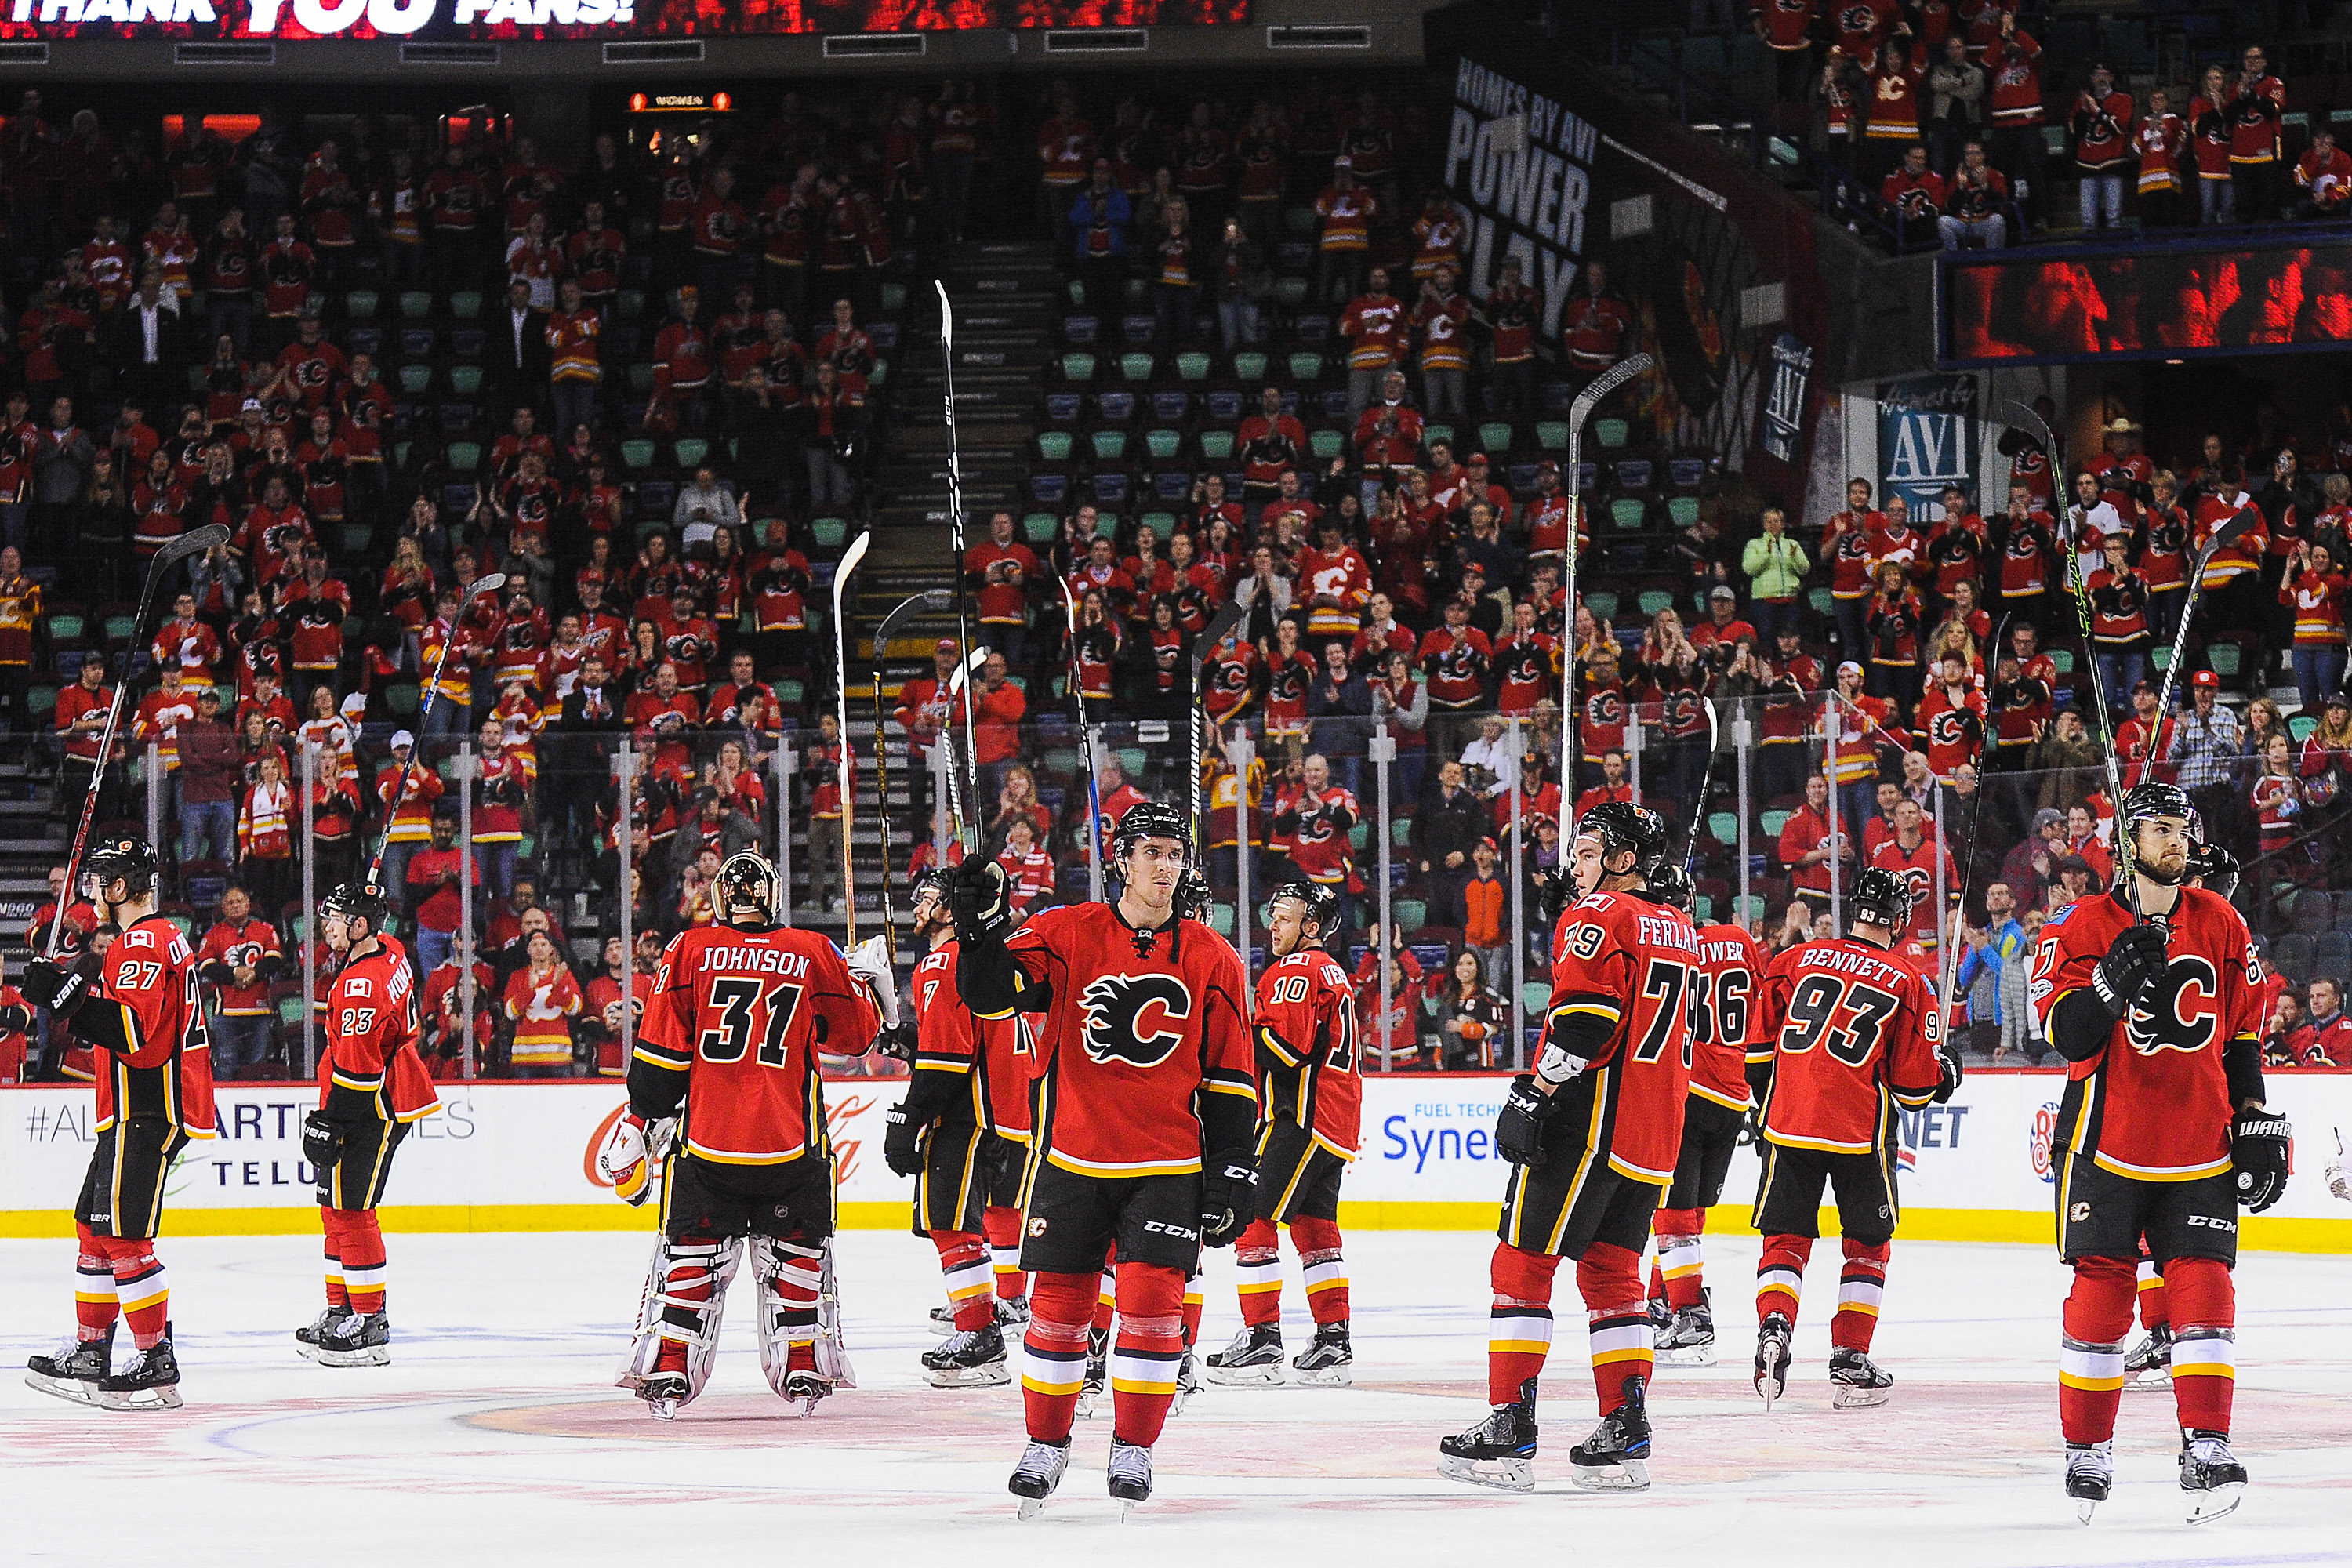 Calgary Flames 9 days until the season starts: #9 Lanny McDonald